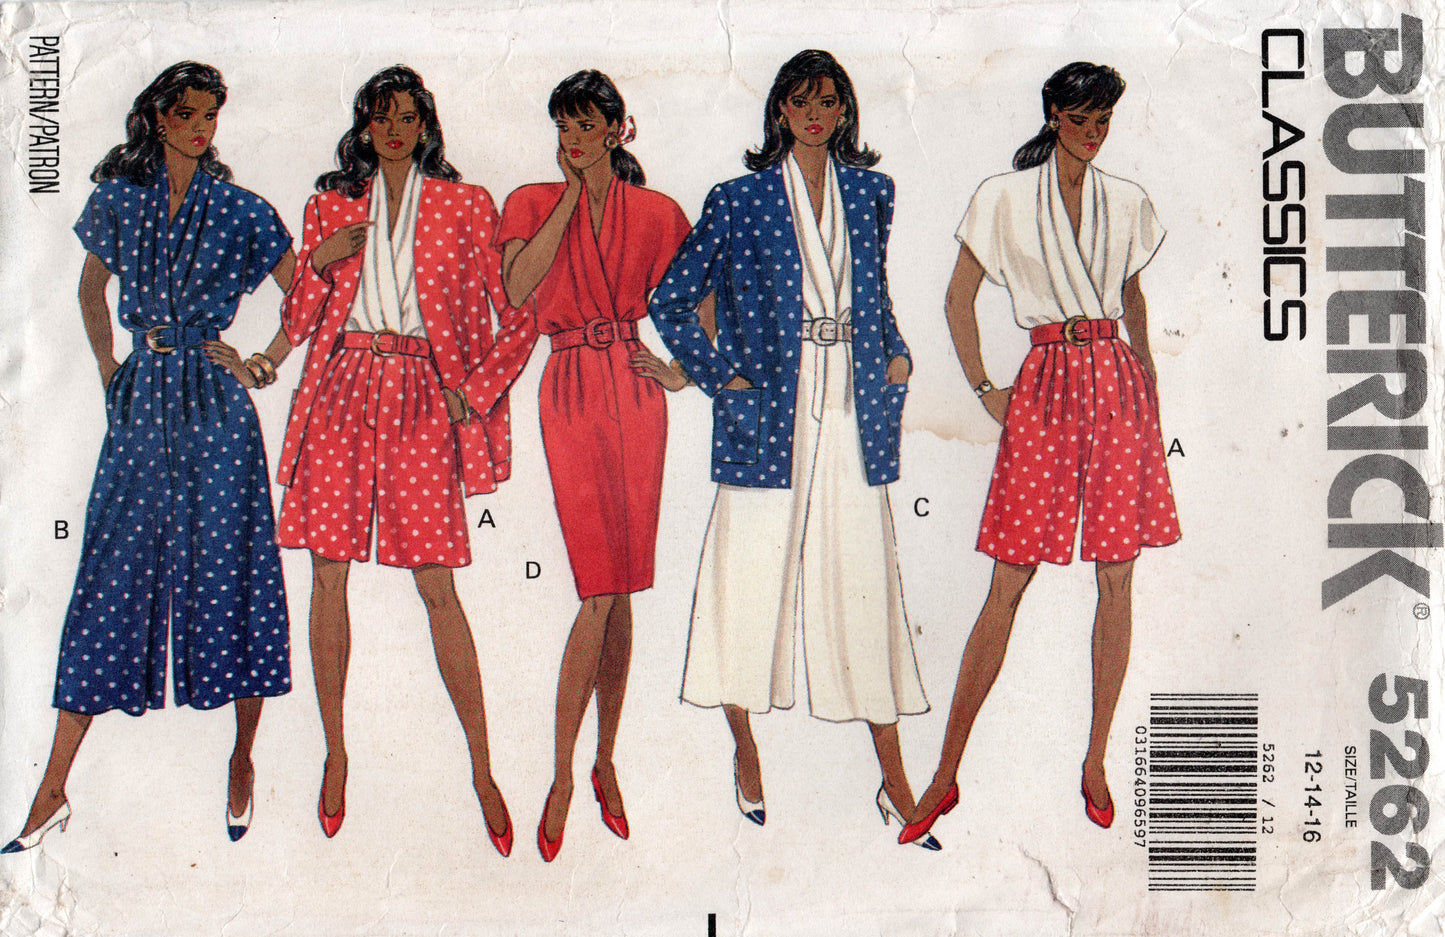 Butterick 5262 Womens Mock Wrap Colour Block Dress or Jumpsuit & Jacket 1990s Vintage Sewing Pattern Size 12 - 16 UNCUT Factory Folded